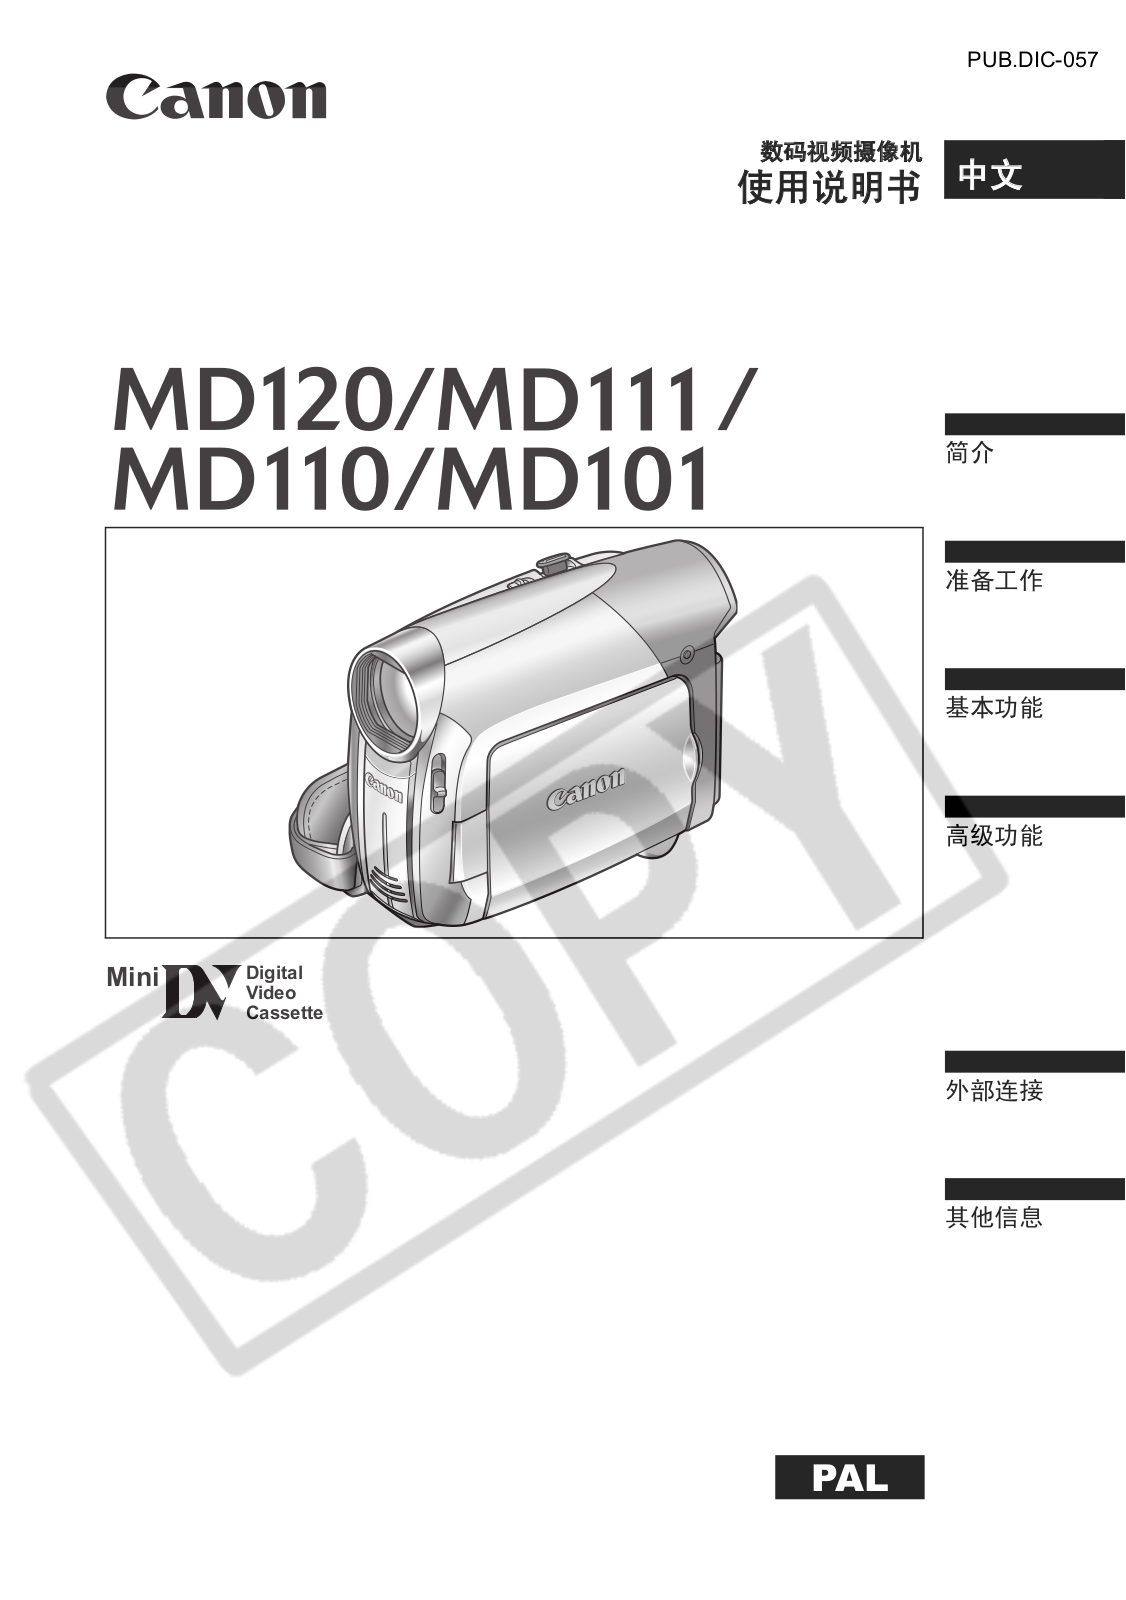 CASIO MD120, MD111, MD110, MD101 User Manual